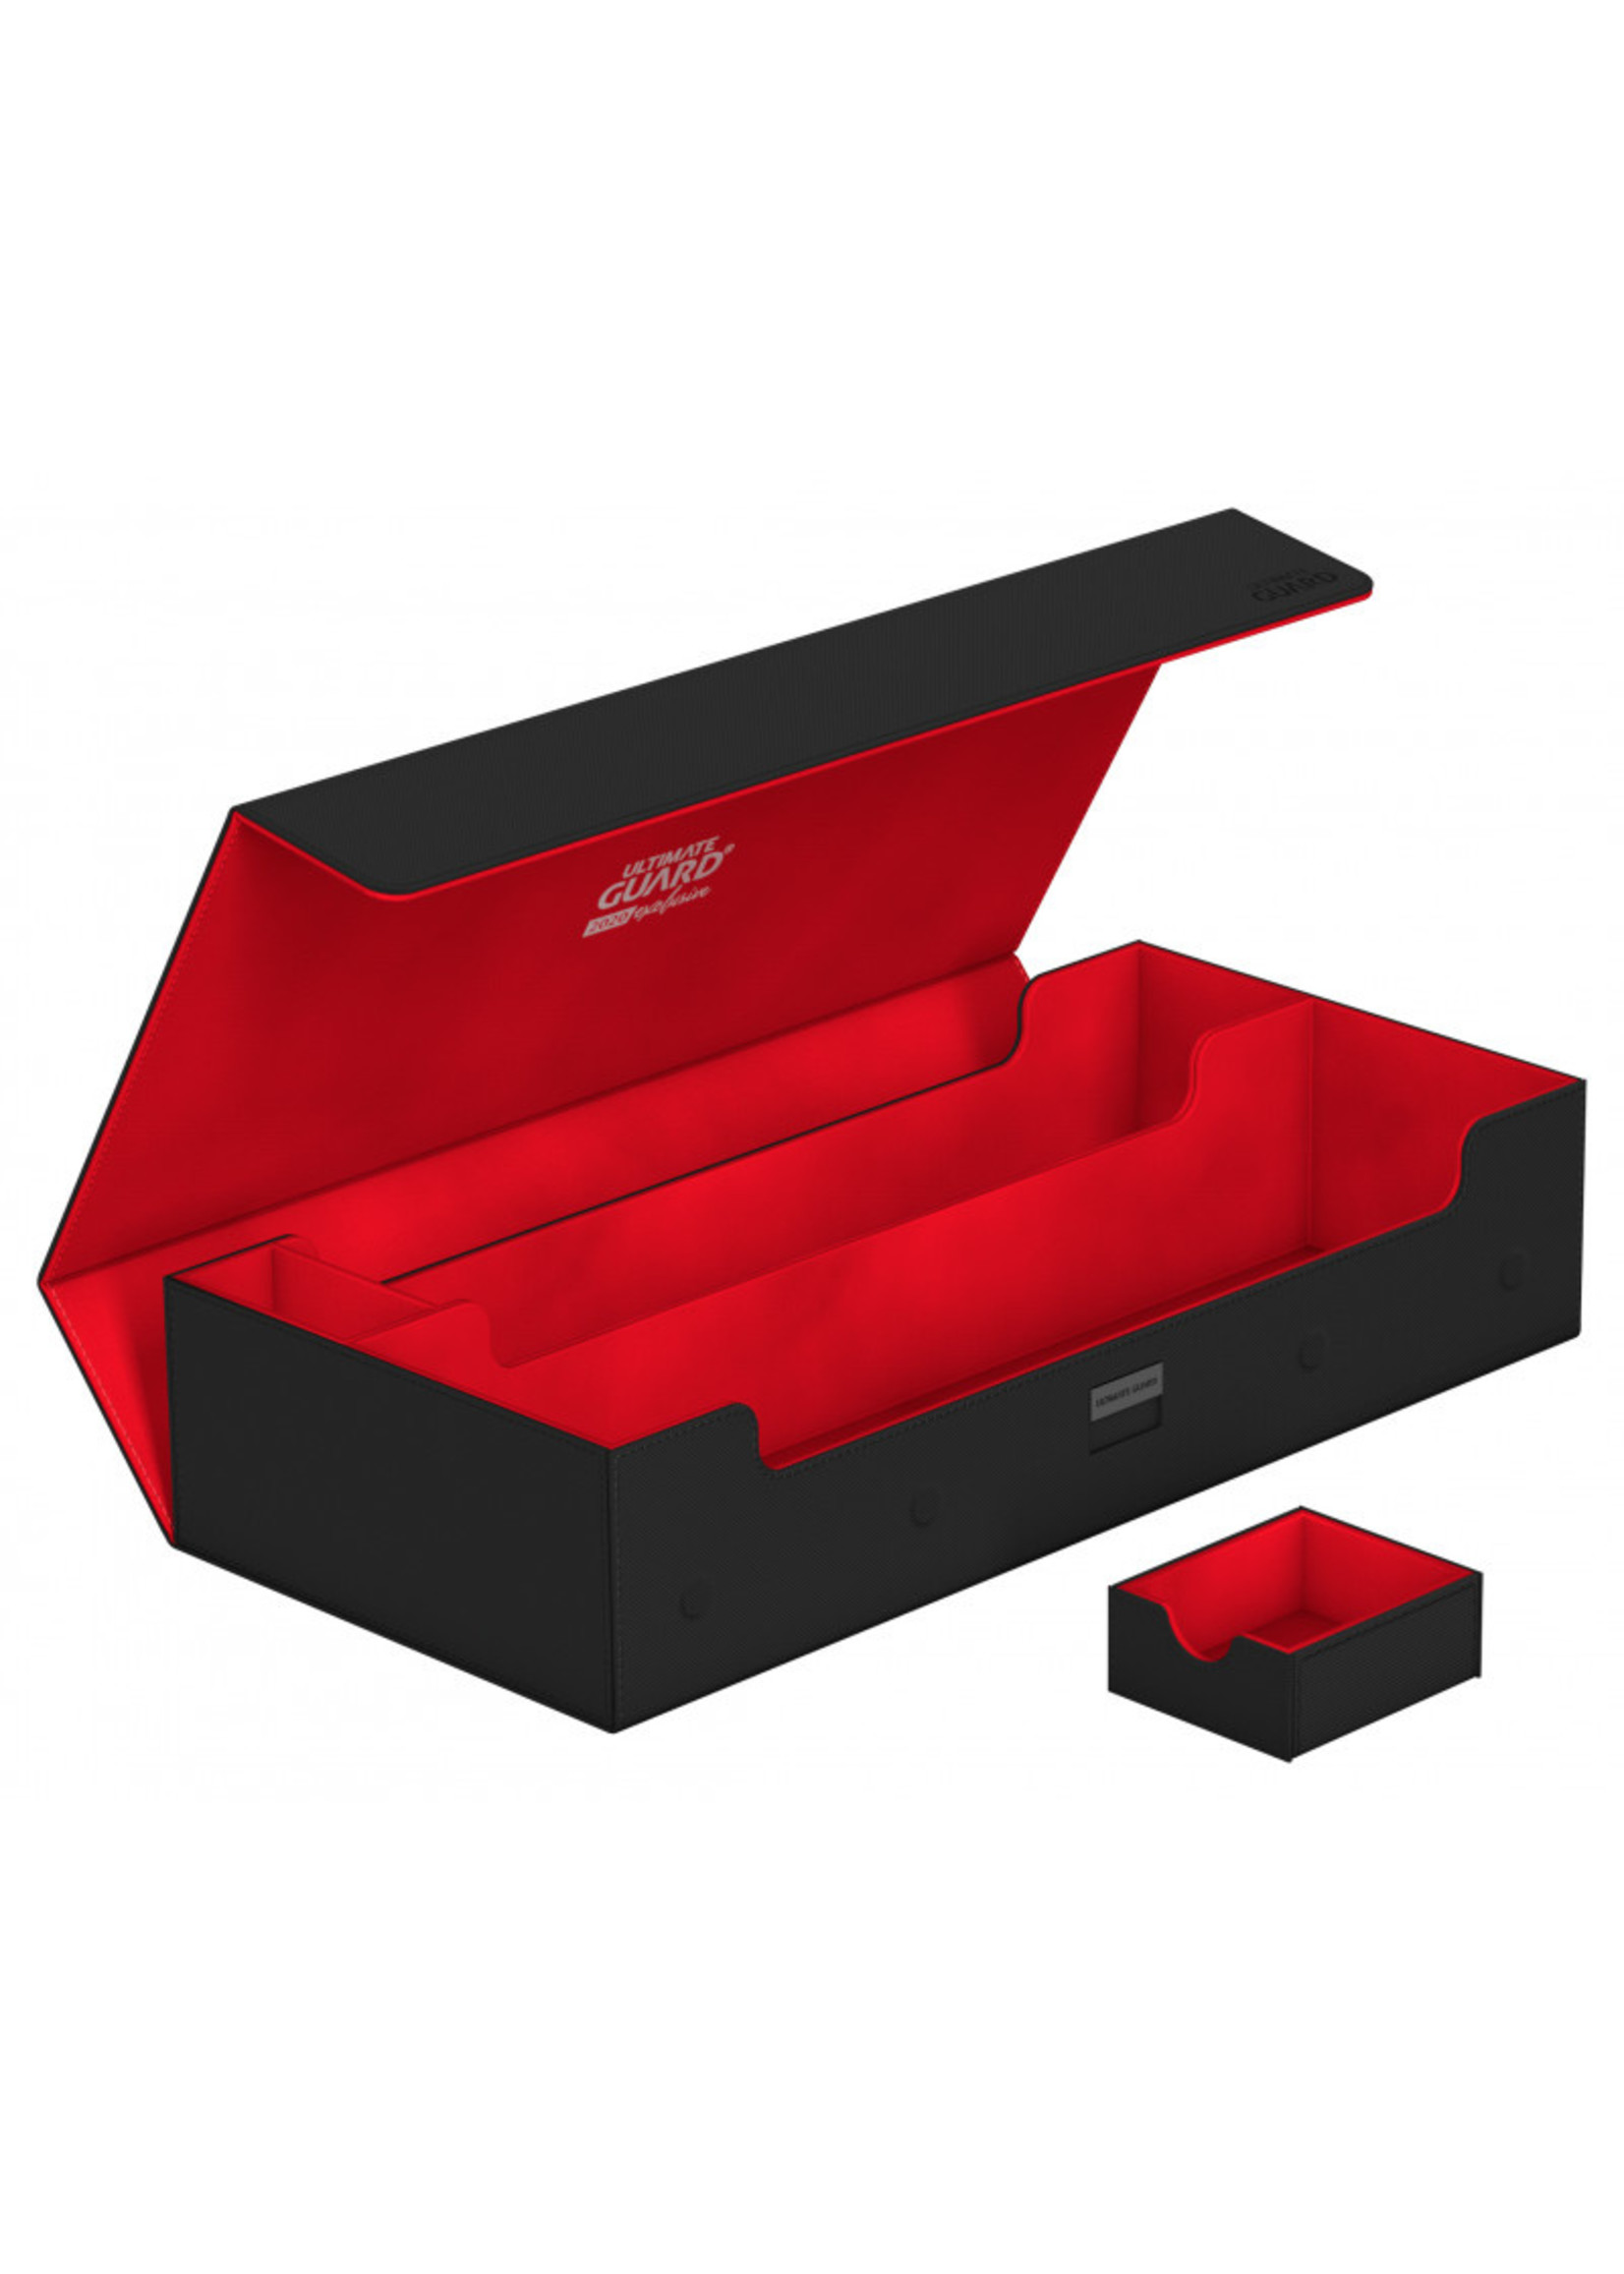 ULTIMATE GUARD FLIP n TRAY RED 80 XENOSKIN DECK CASE Card Box Standard Size 